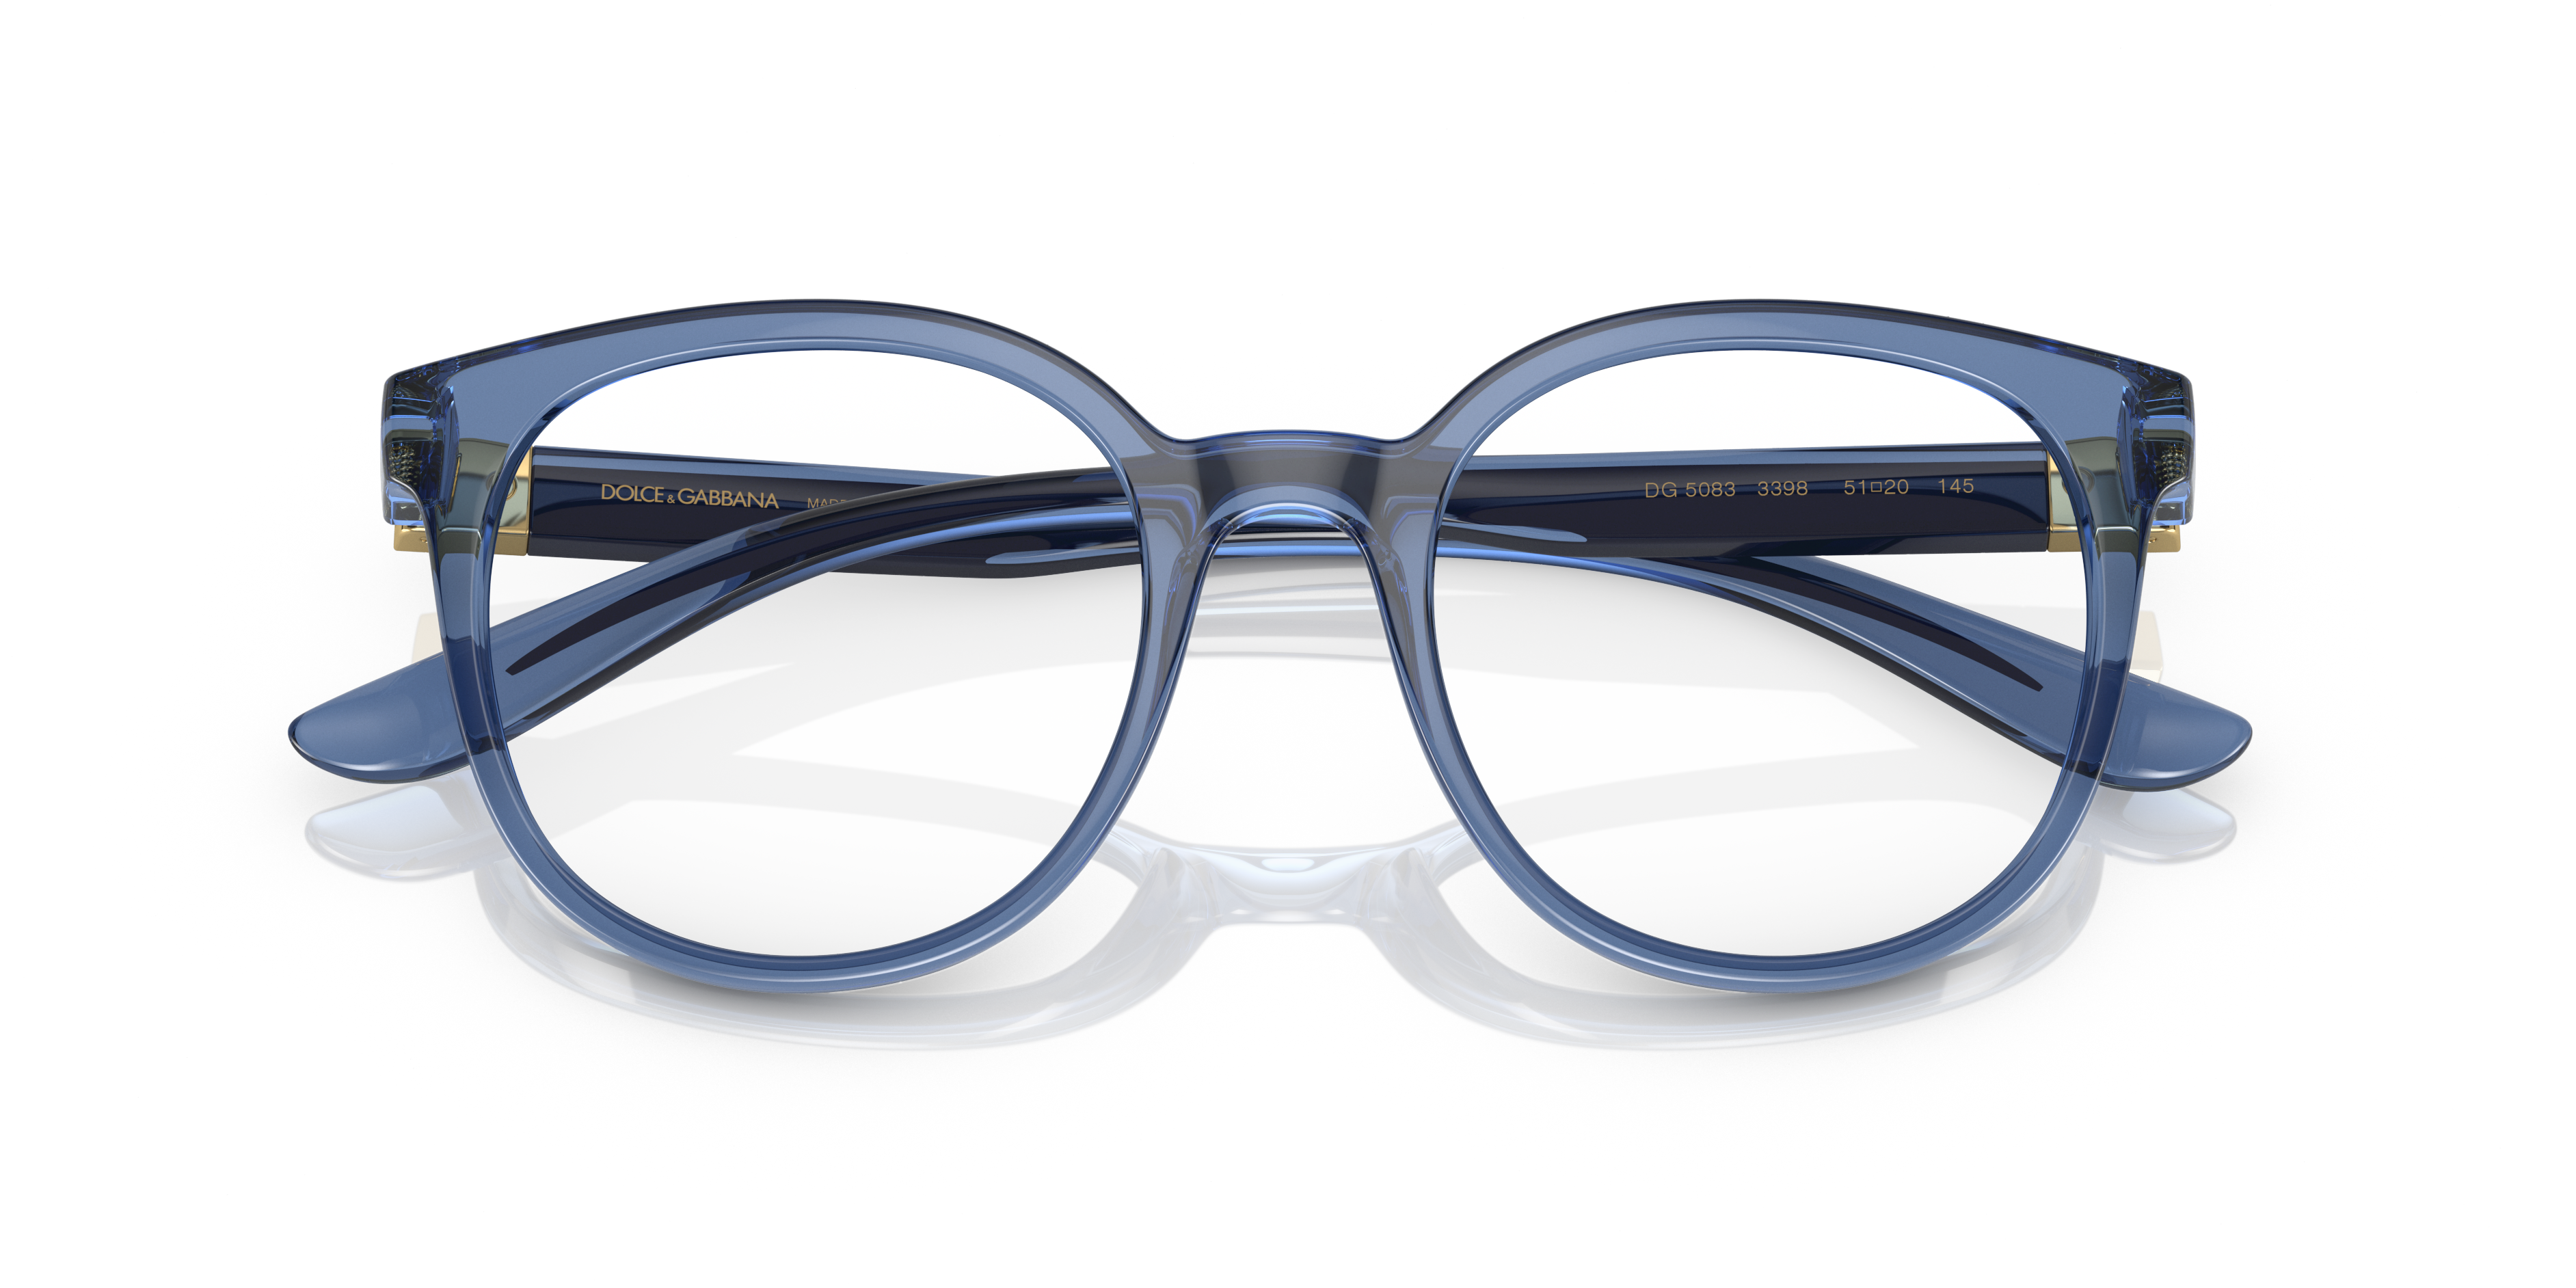 Folded Dolce & Gabbana DG 5083 Glasses Transparent / Blue